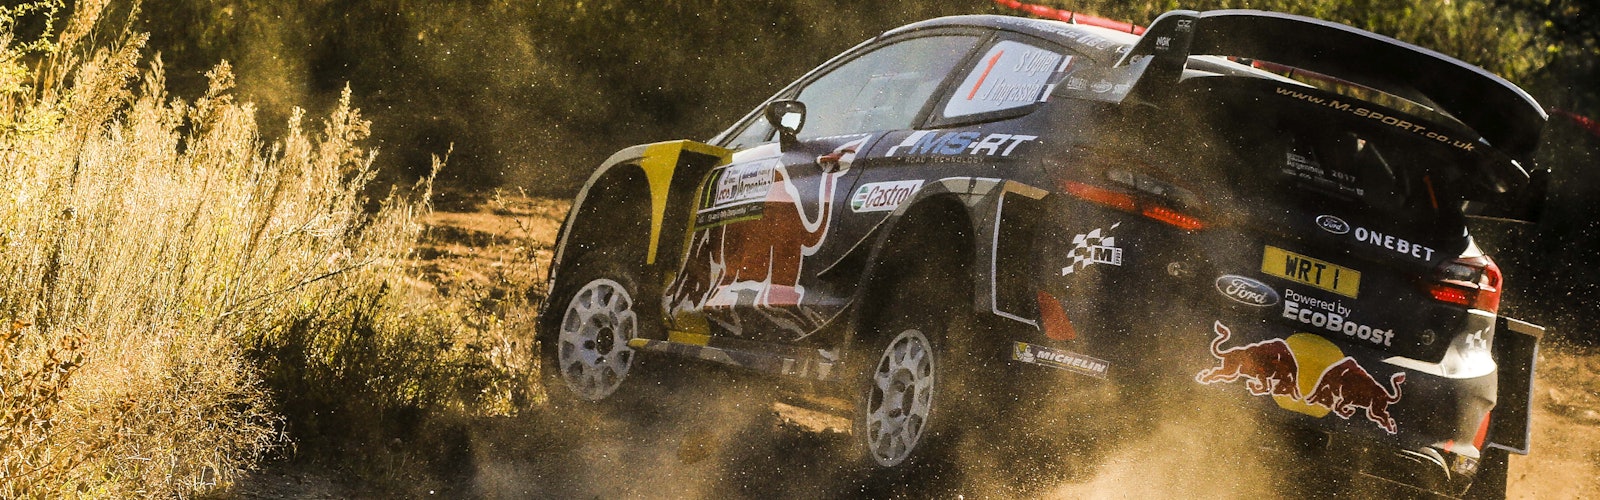 FIA WORLD RALLY CHAMPIONSHIP 2017 – WRC ARGENTINA